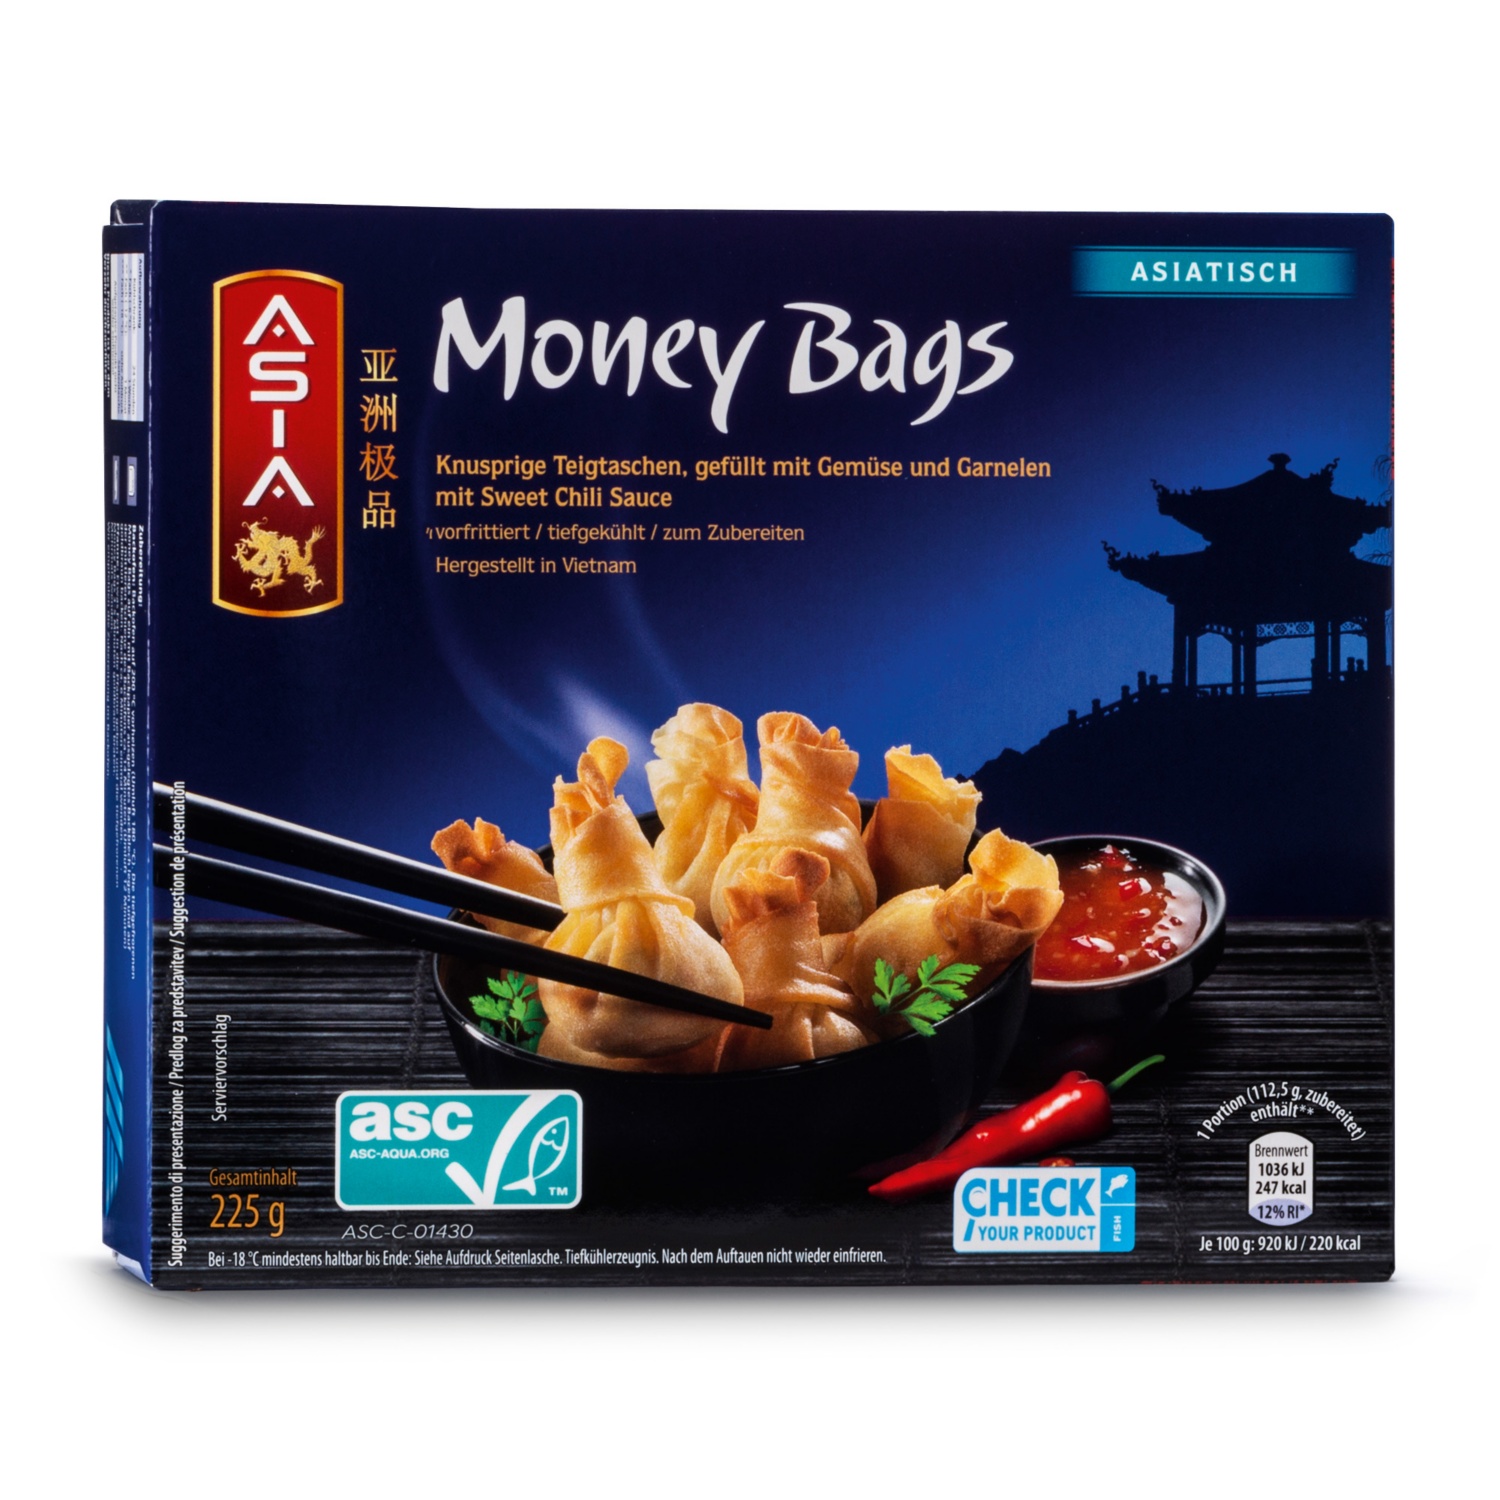 ASIA Assortiment de snacks, money bags